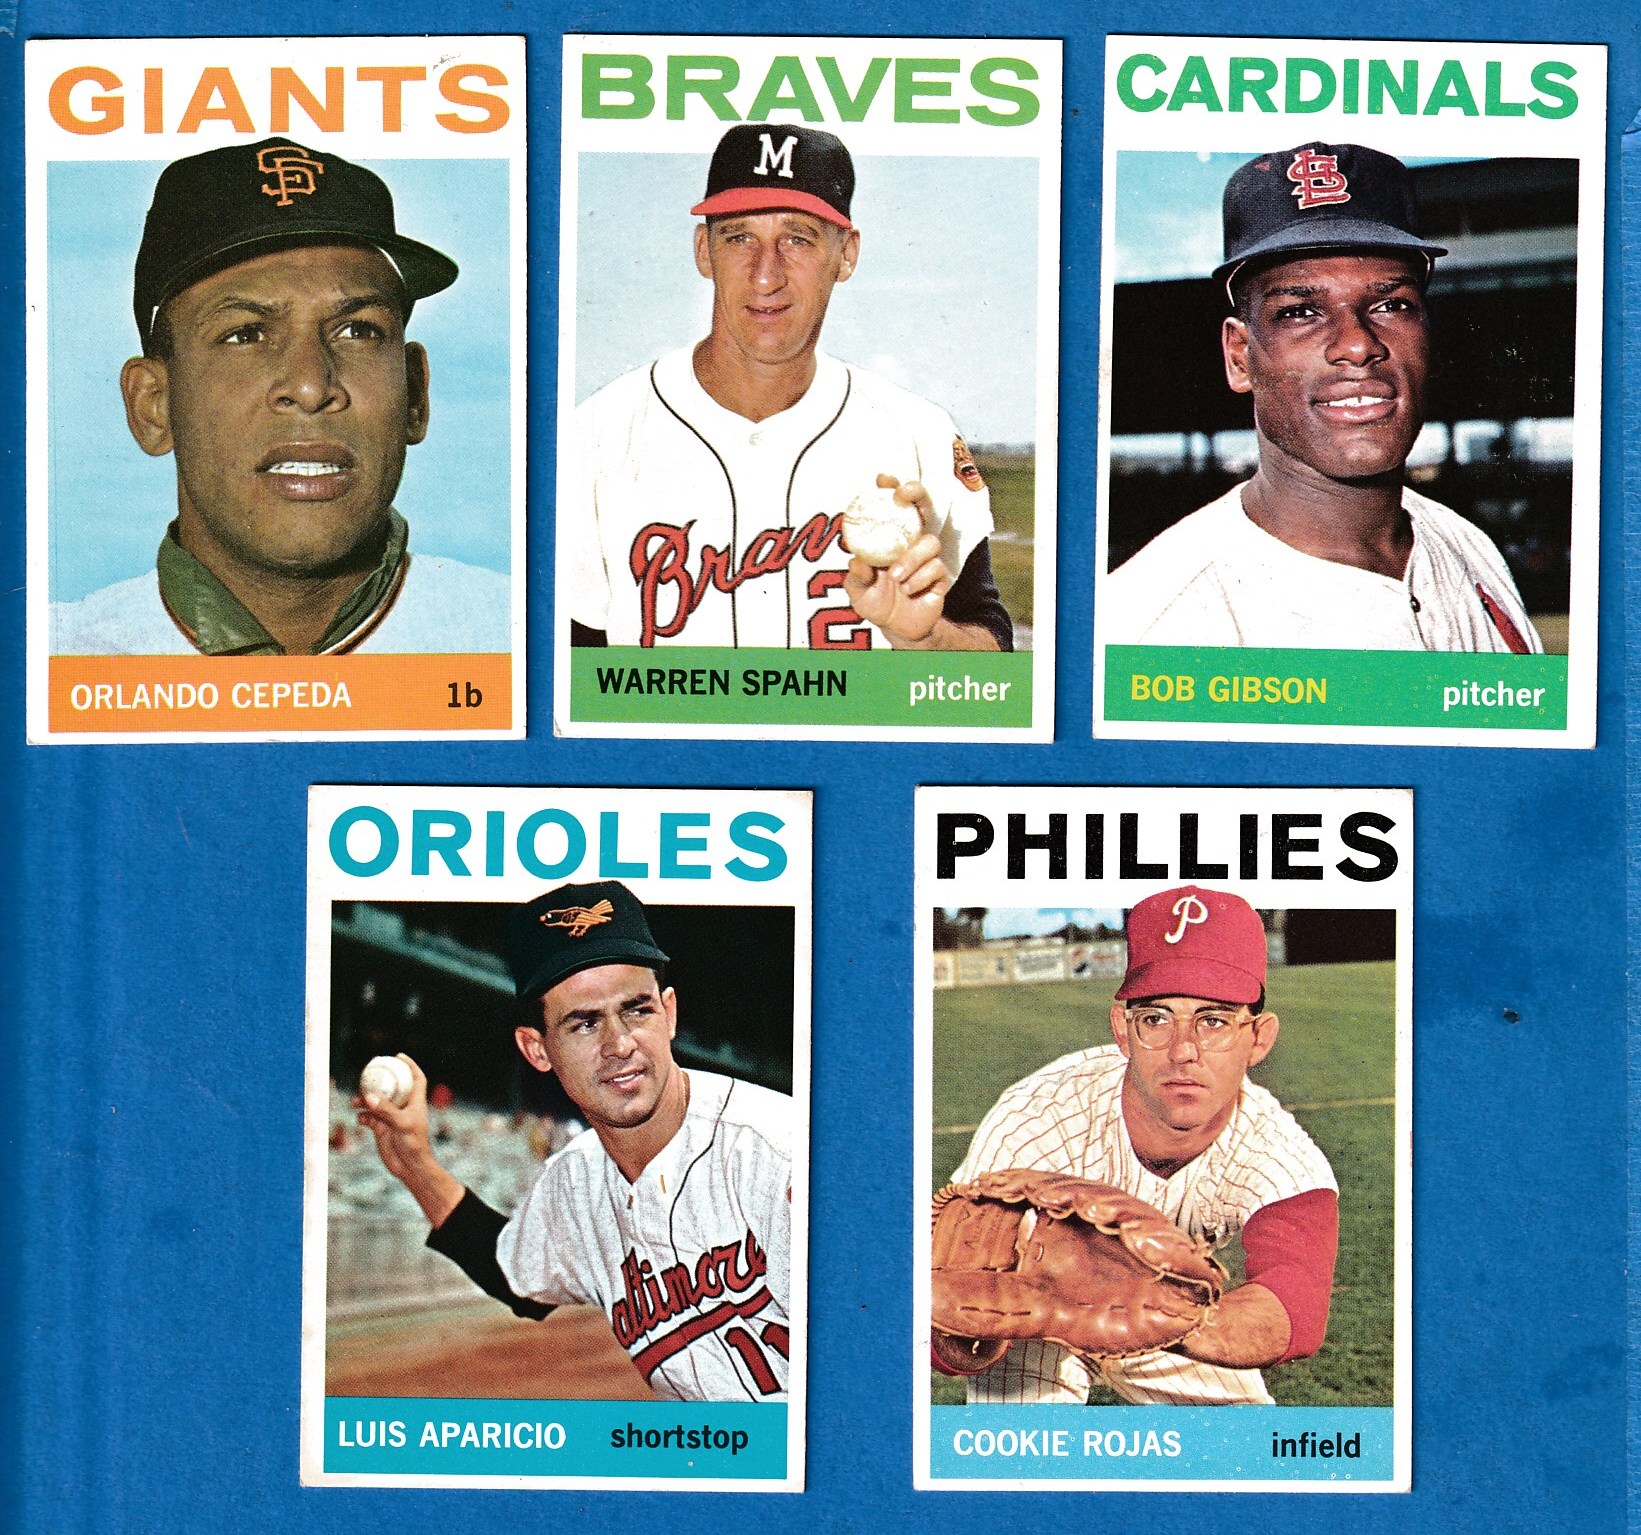 1964 Topps #390 Orlando Cepeda (Giants) Baseball cards value